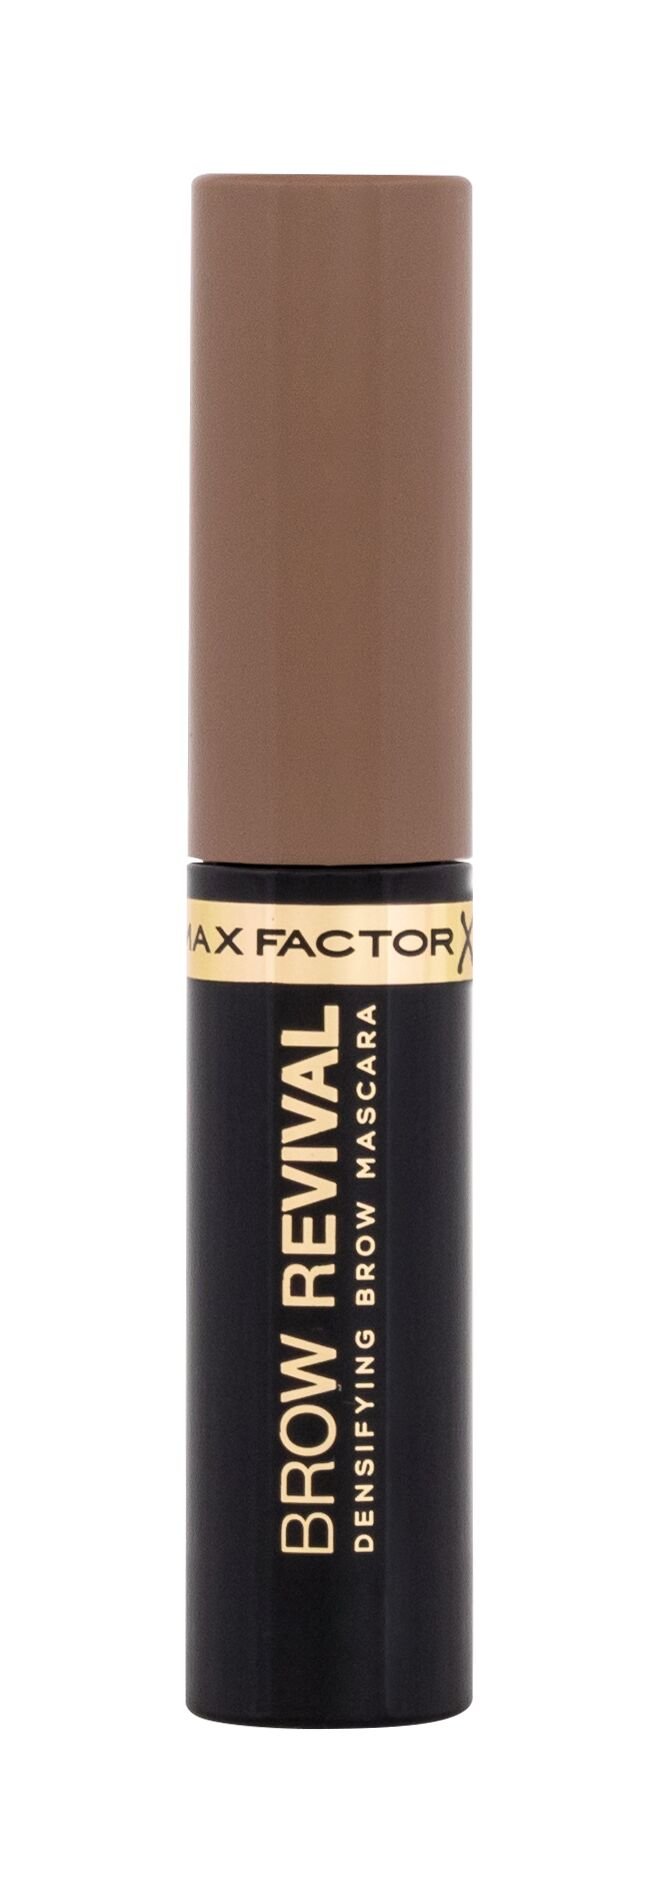 Max Factor Brow Revival 4,5ml antakių tušas